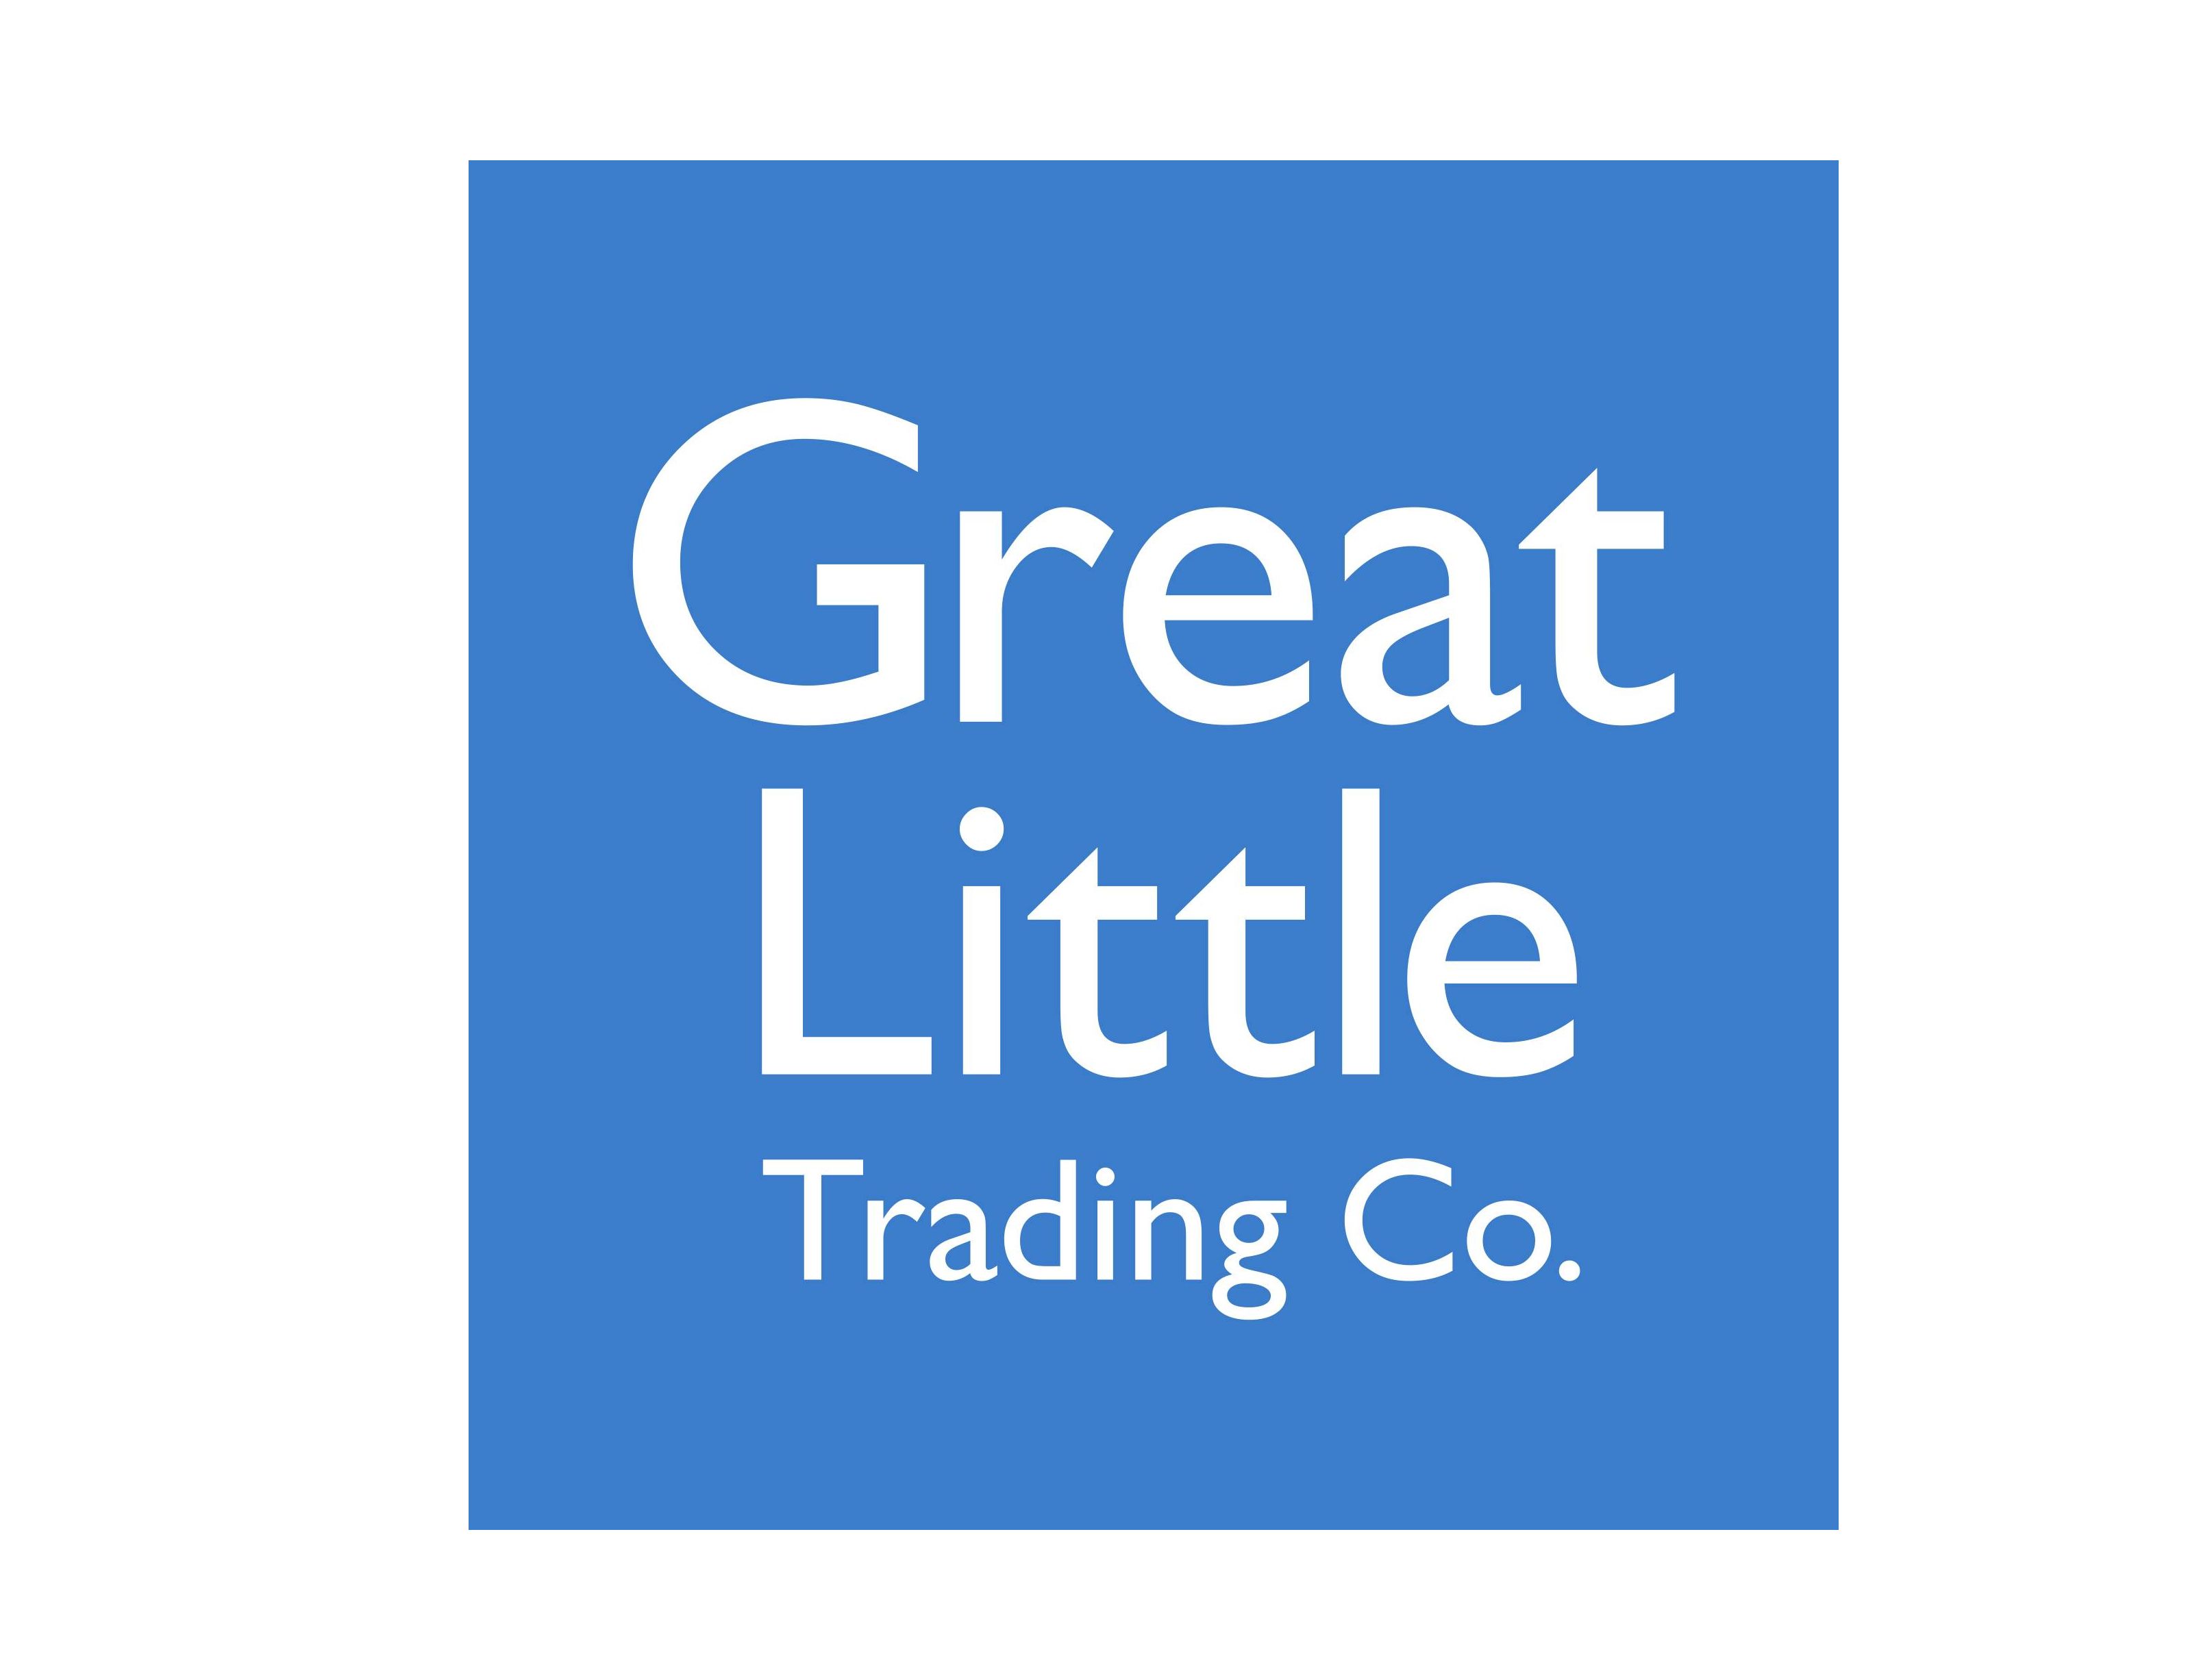 Great Little Trading Co. brand logo